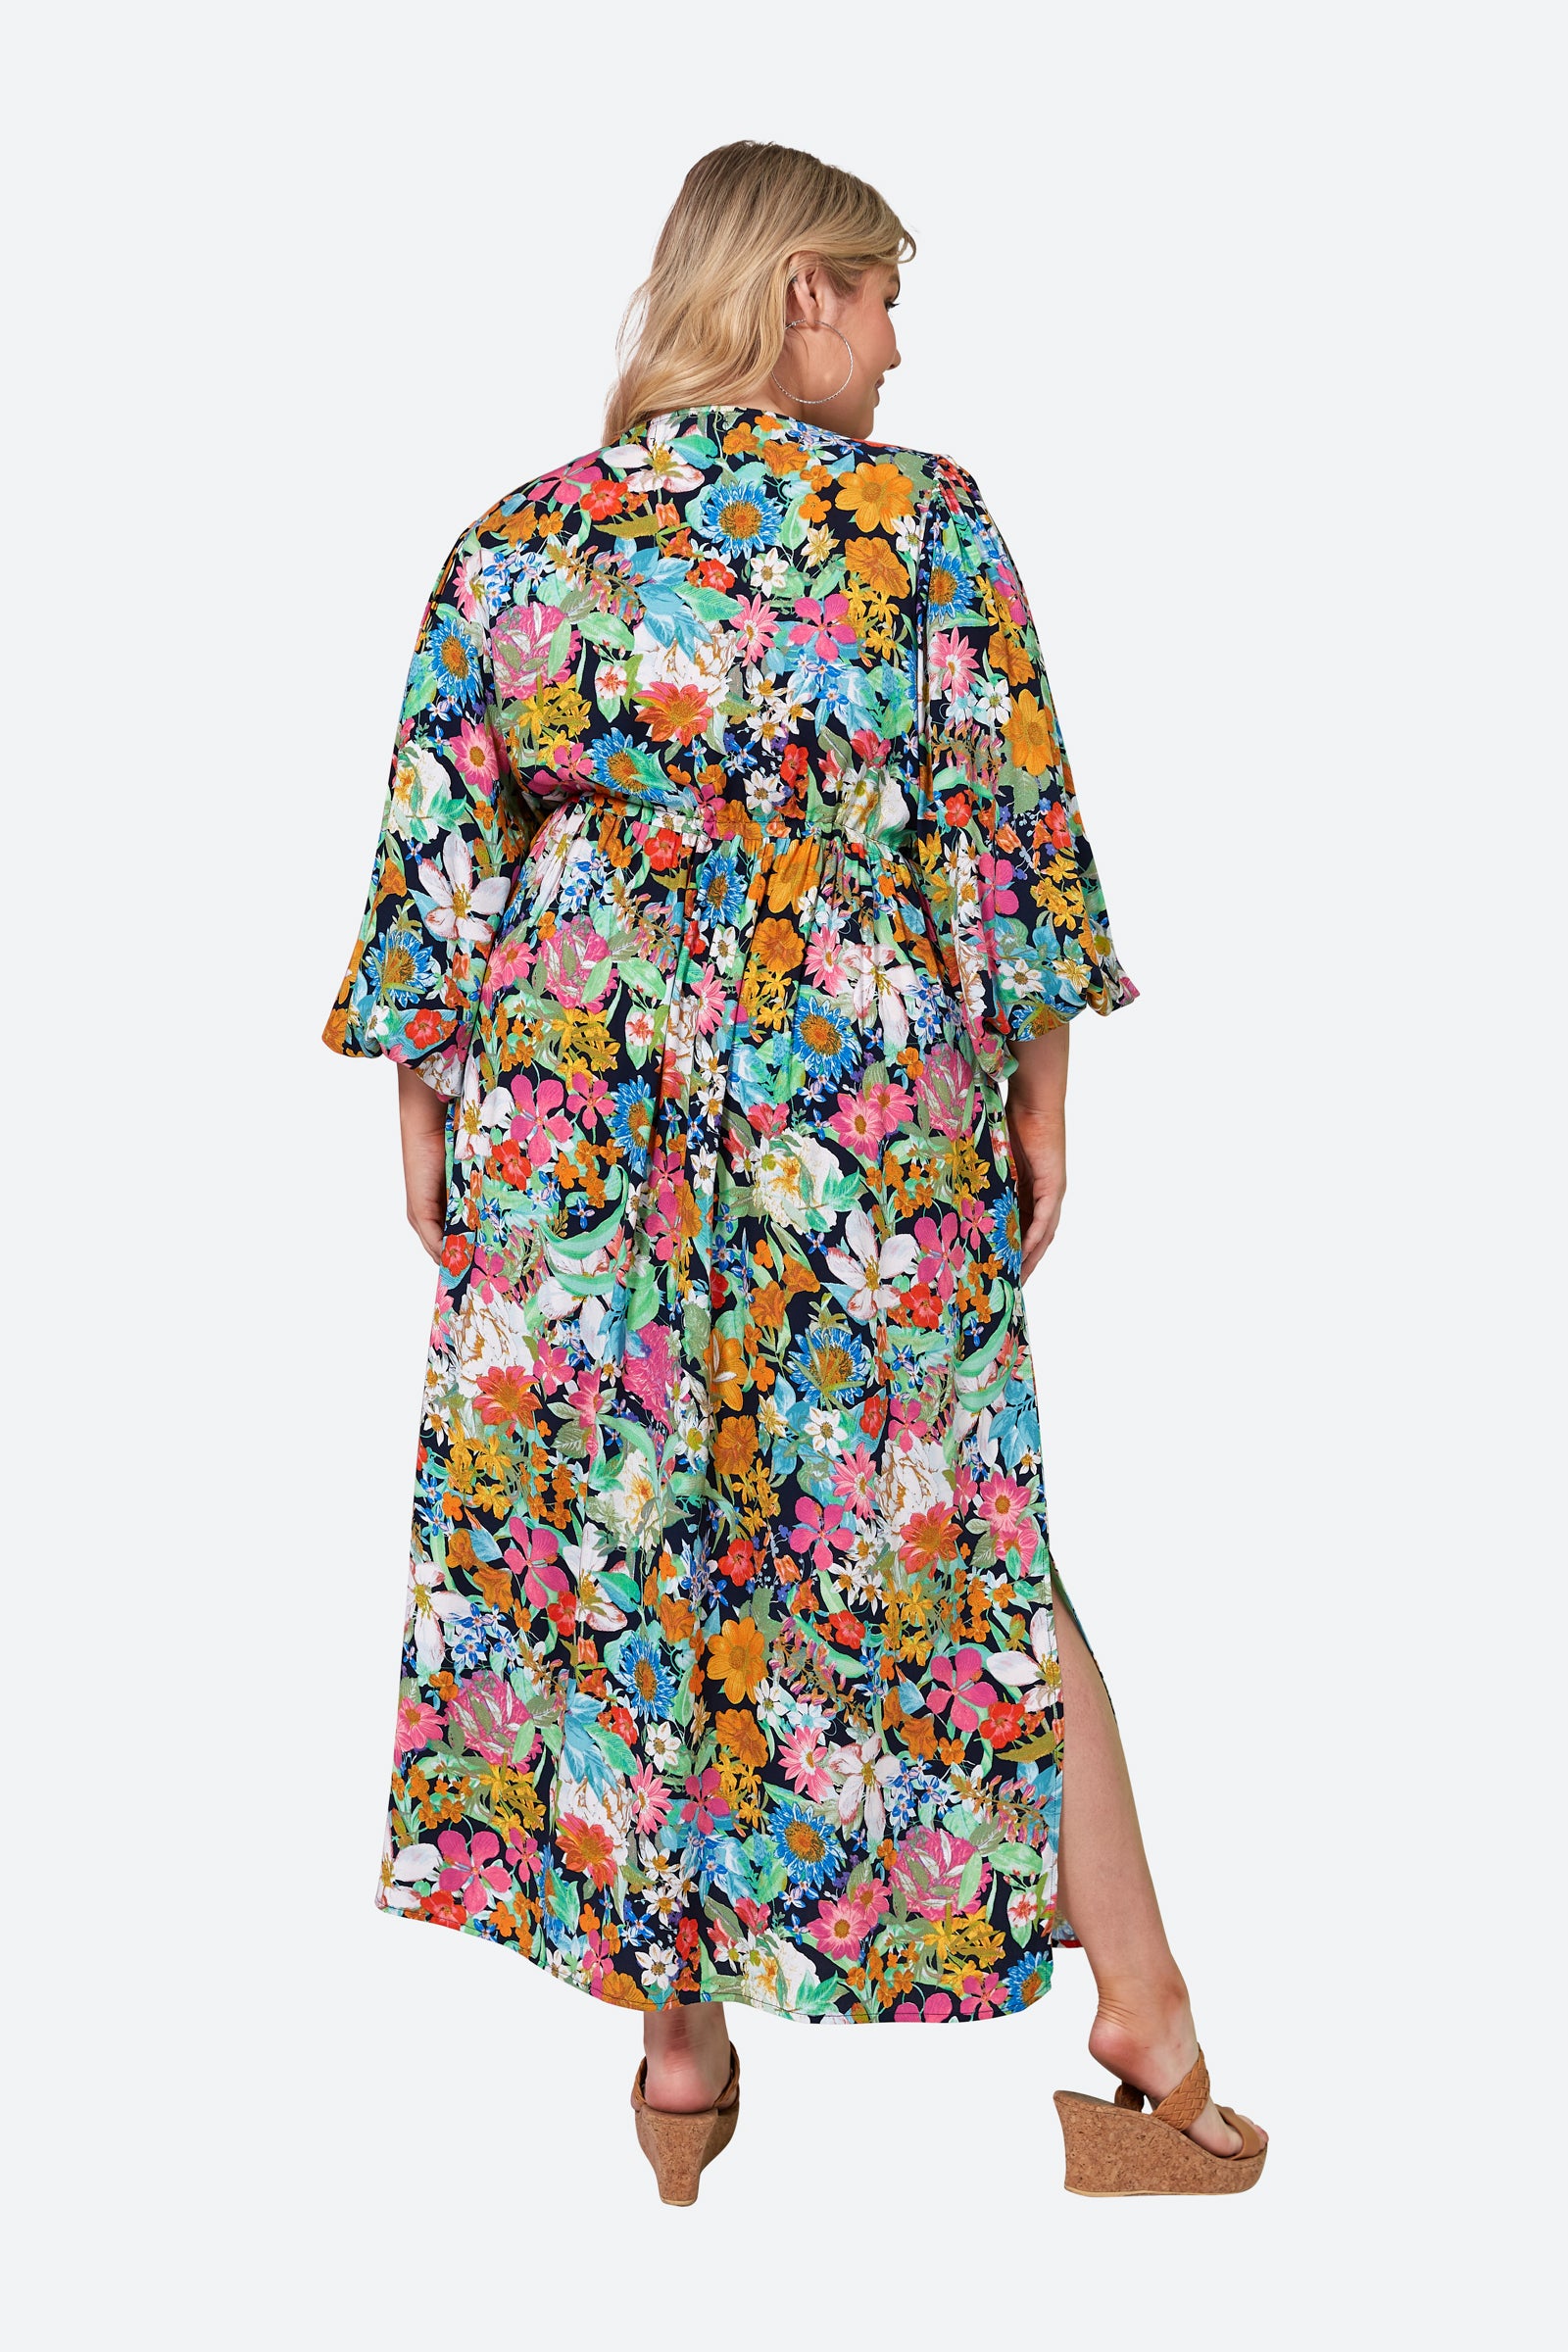 Esprit Maxi - Navy Flourish - eb&ive Clothing - Dress Maxi